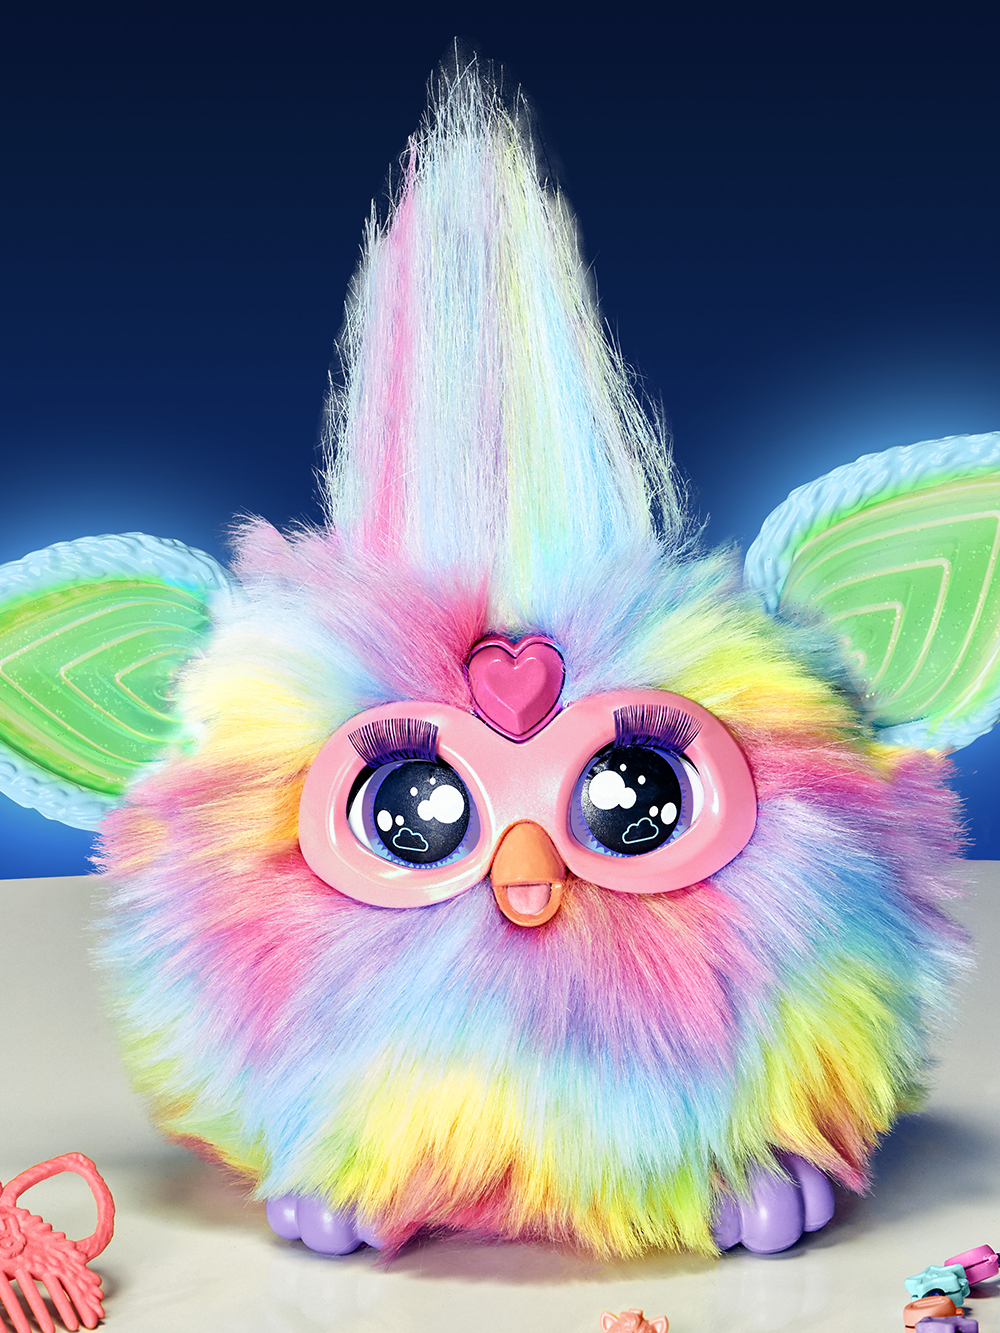 Furby Furblets Ooh-Koo, mini peluche électronique